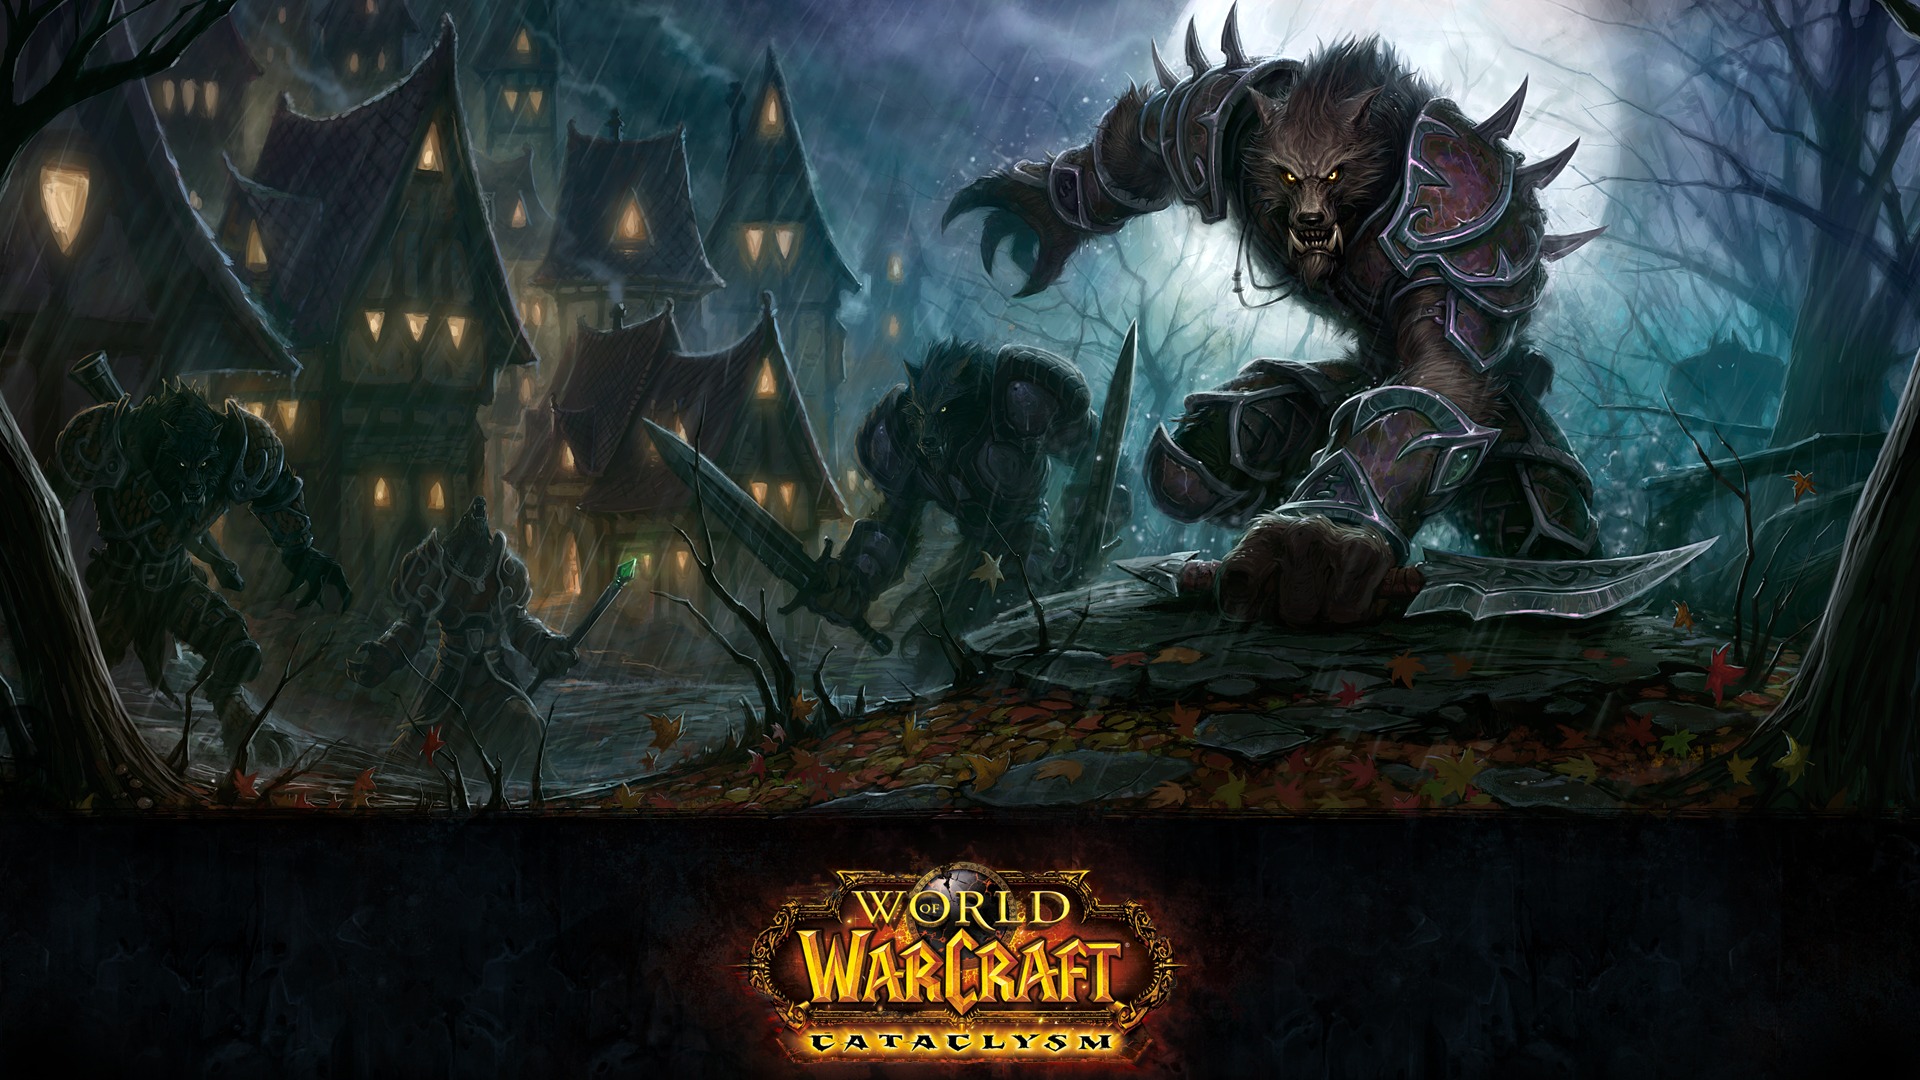 World of Warcraft 魔兽世界高清壁纸(二)8 - 1920x1080